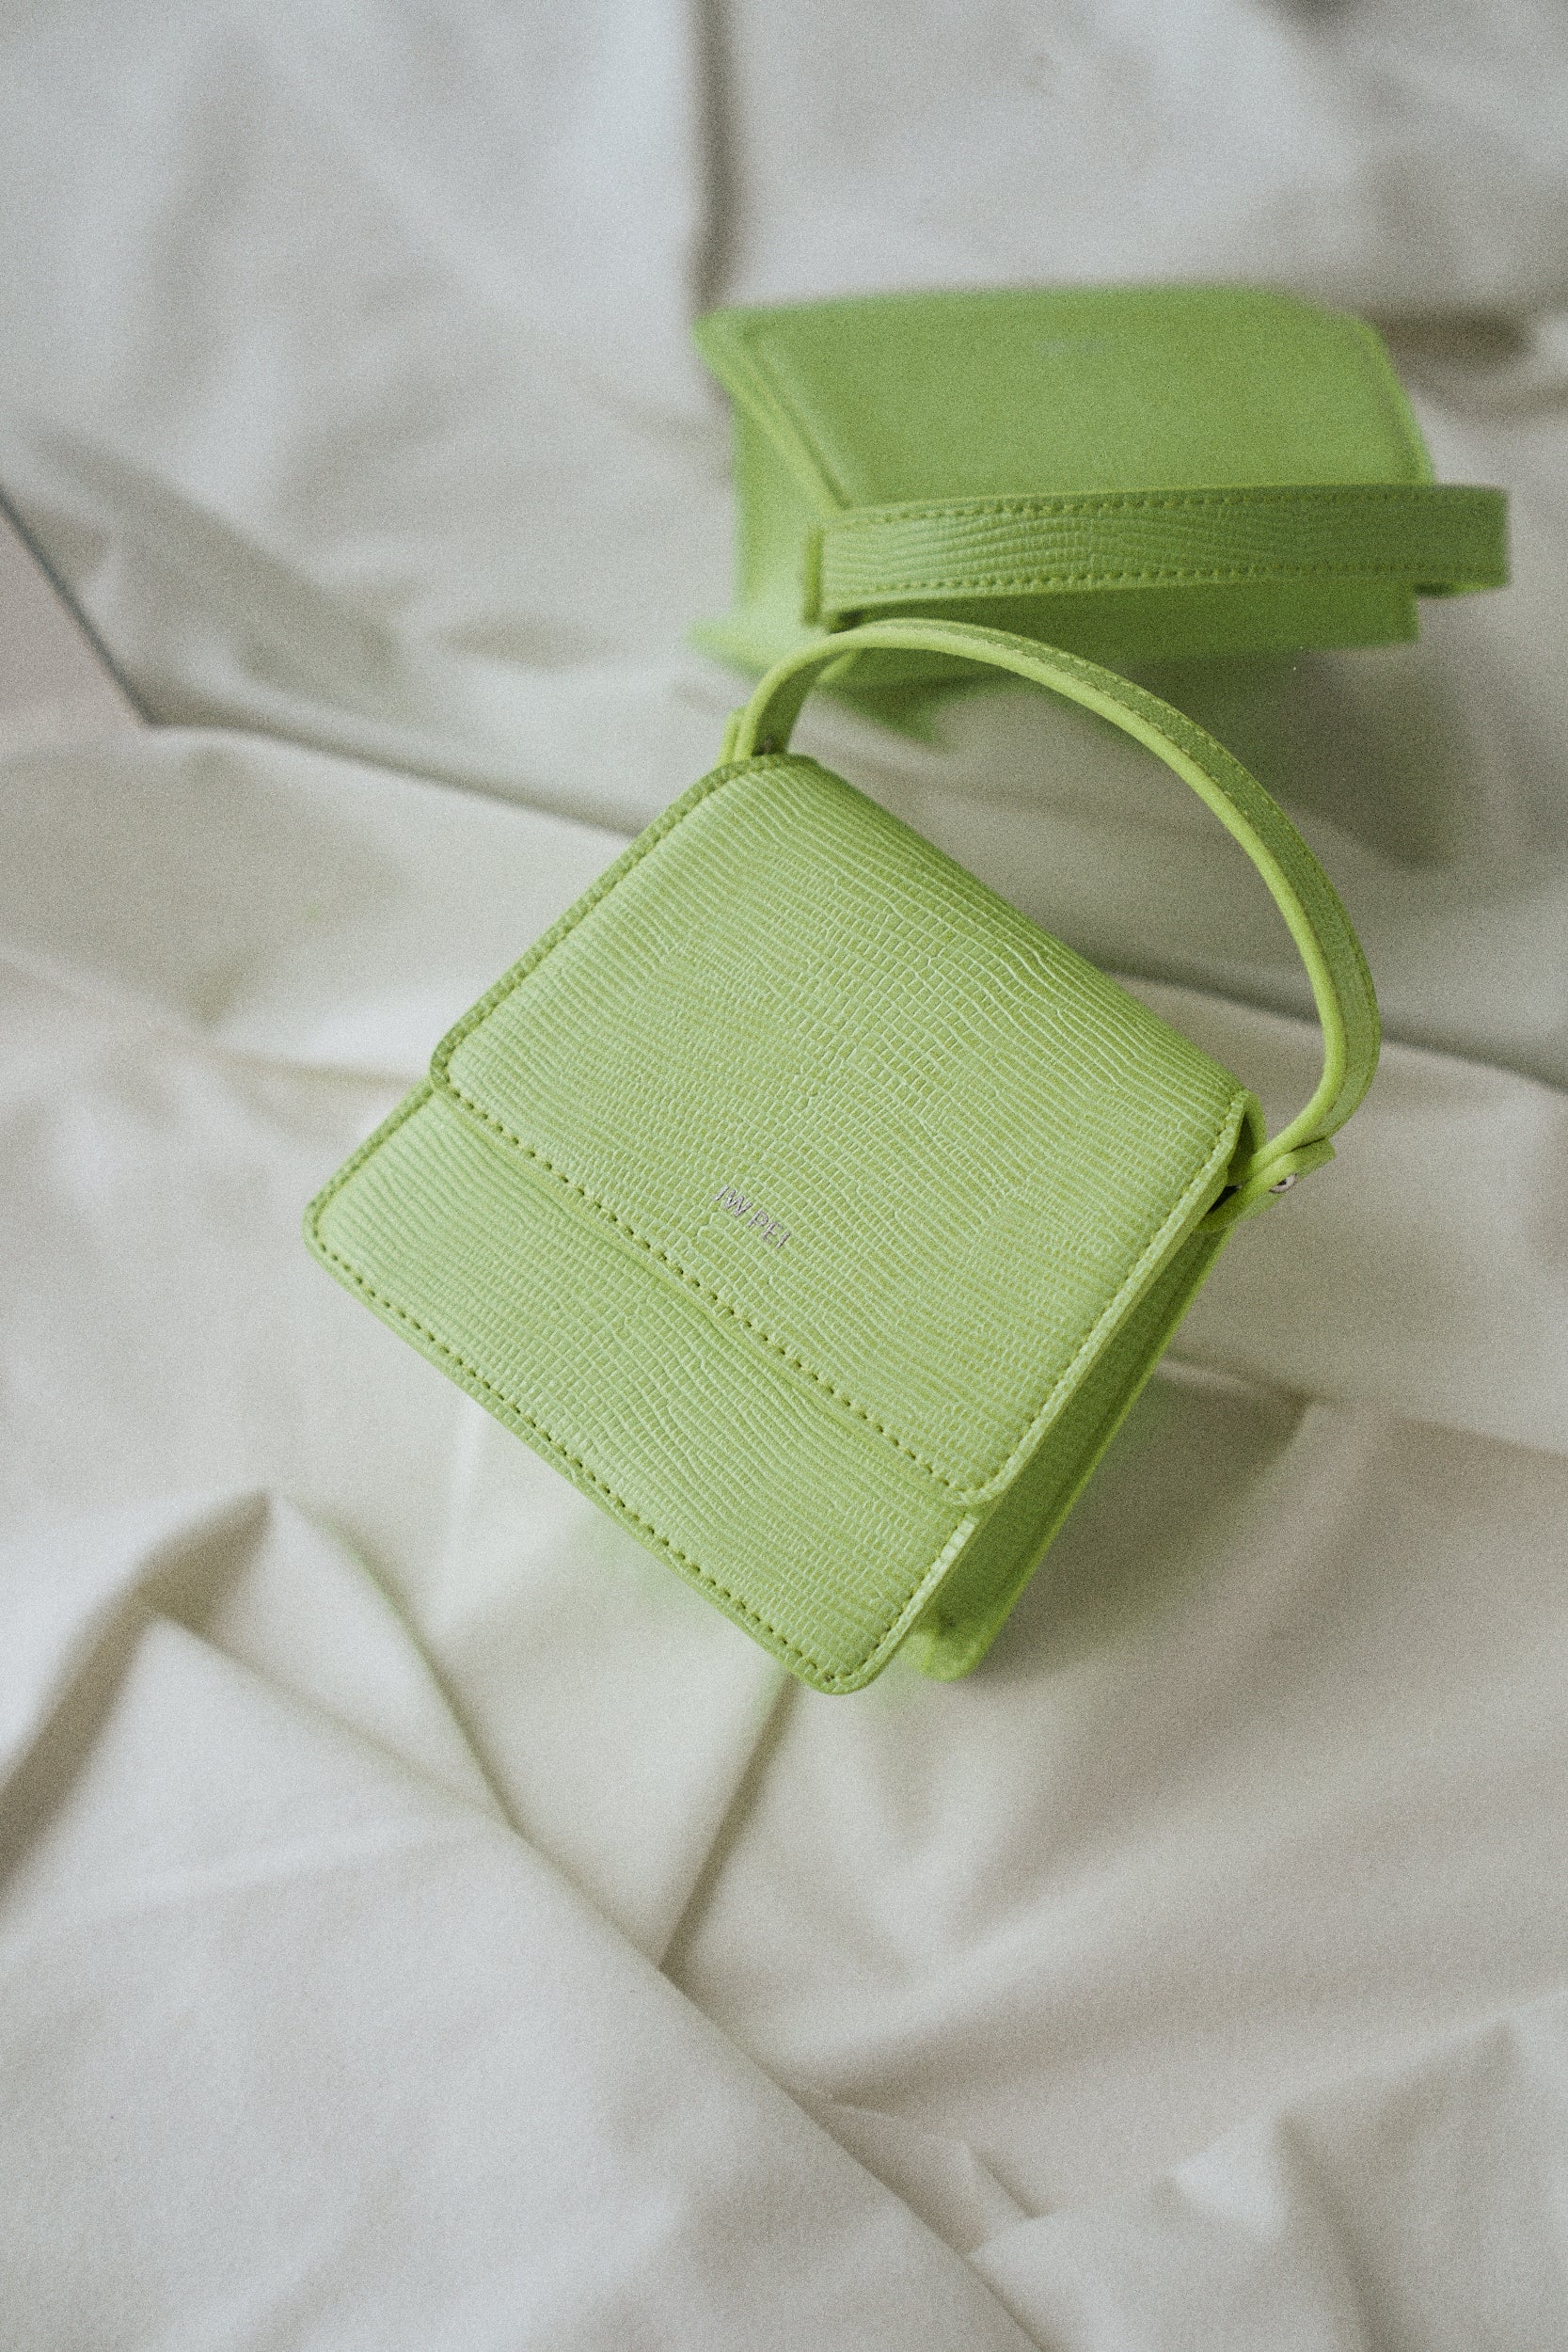 Fae Mini Top Handle Bag - Lime Green Lizard